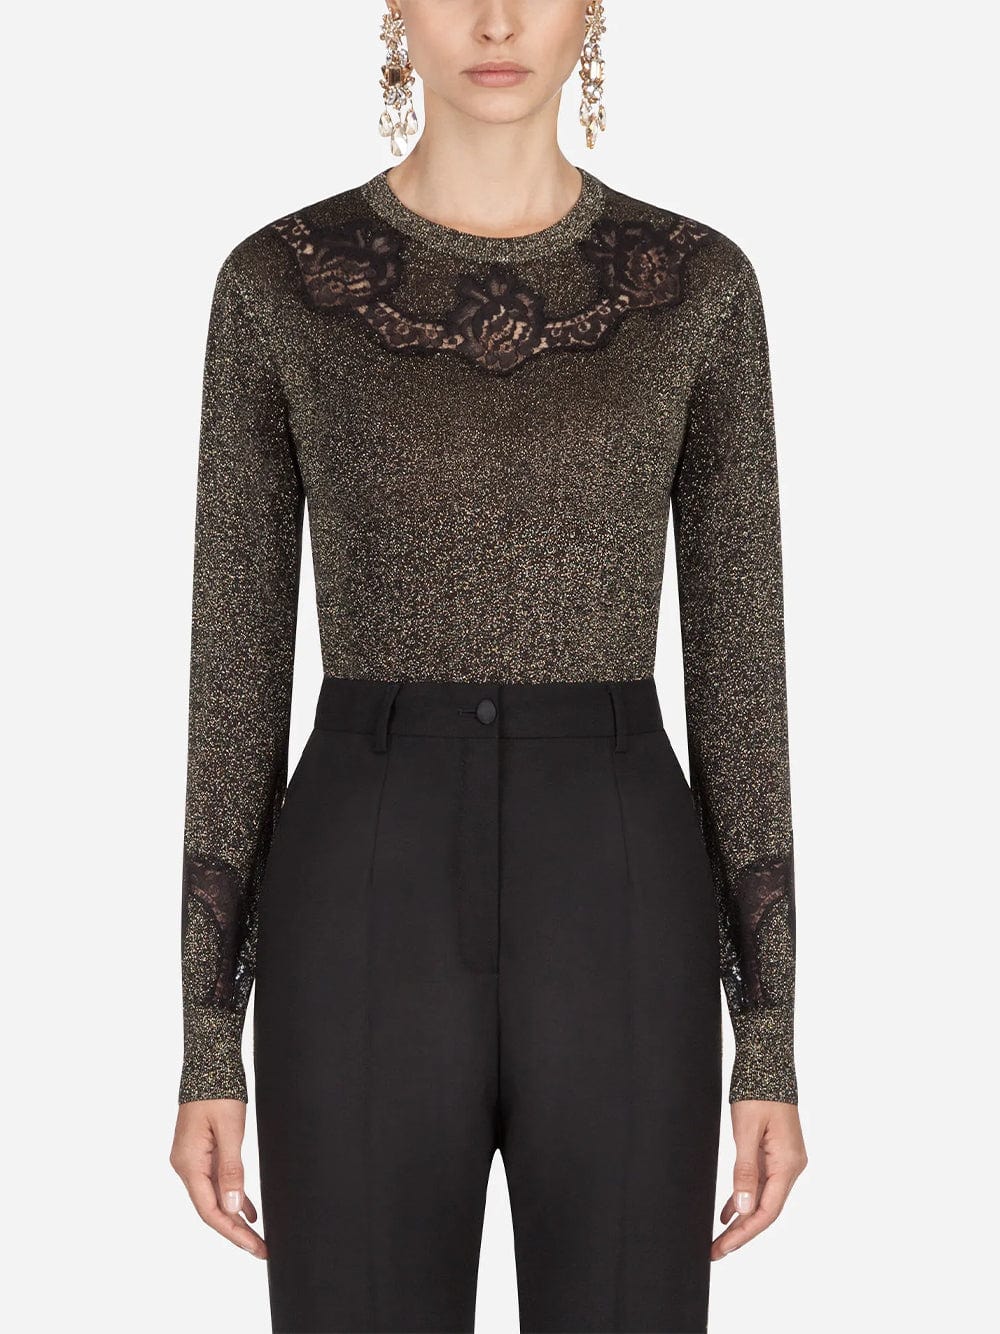 Dolce & Gabbana Lace-Insert Sweater